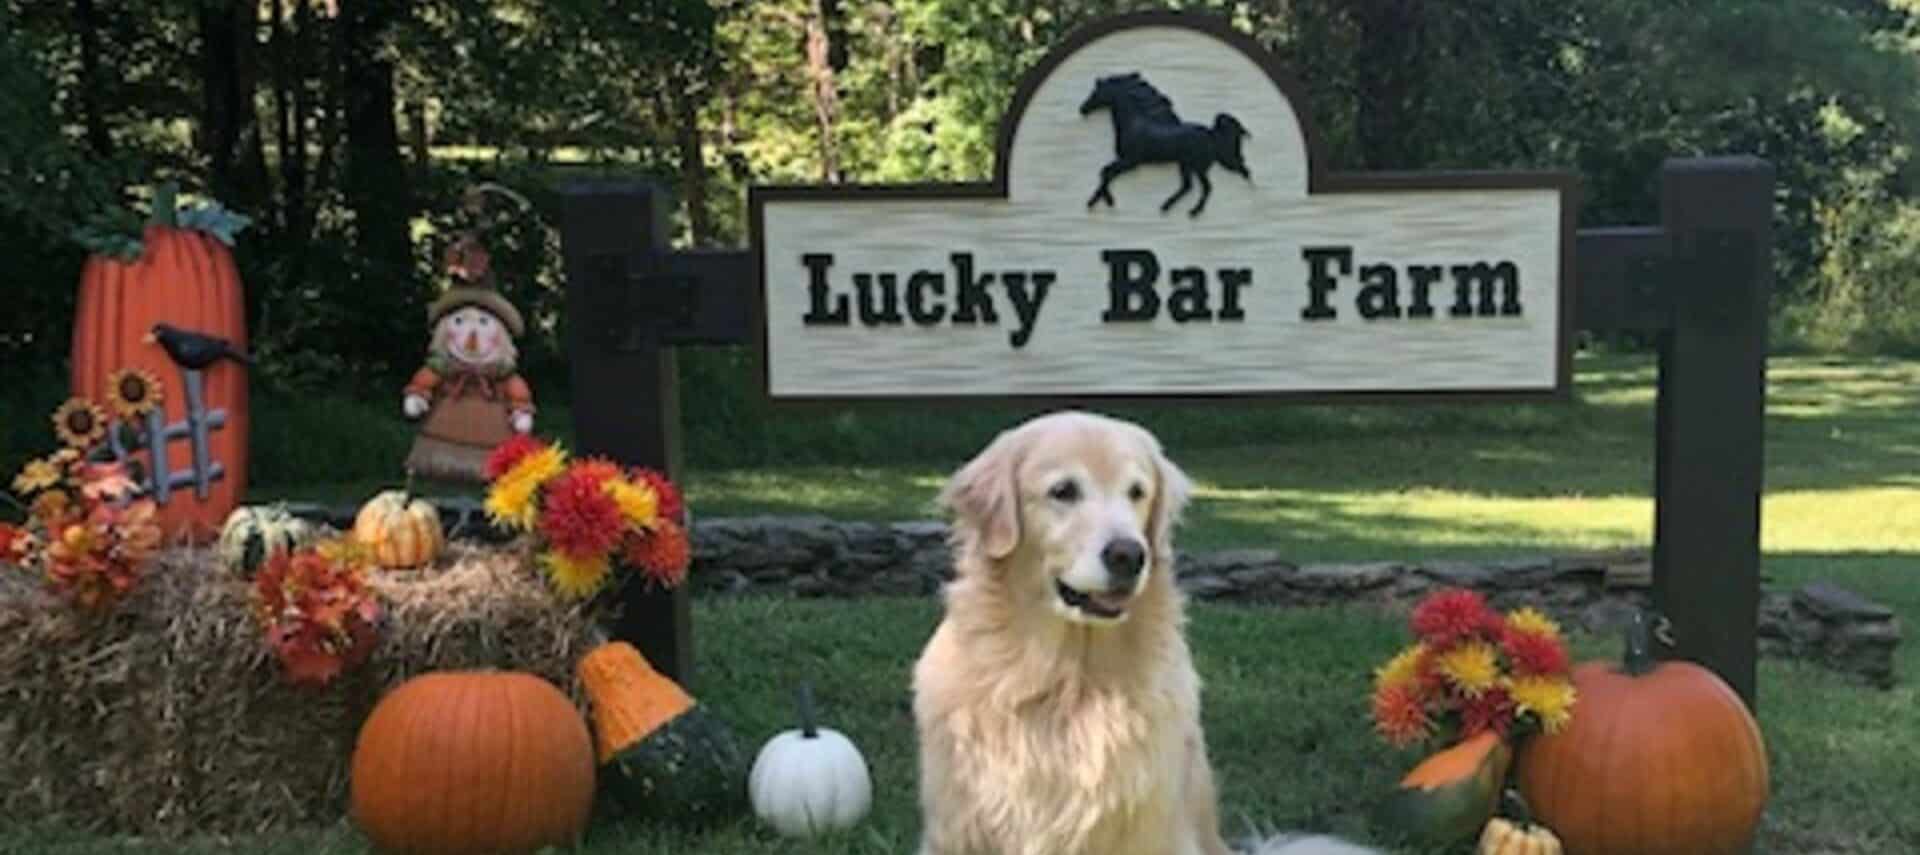 lucky bar farm sign with a golden retriever in front